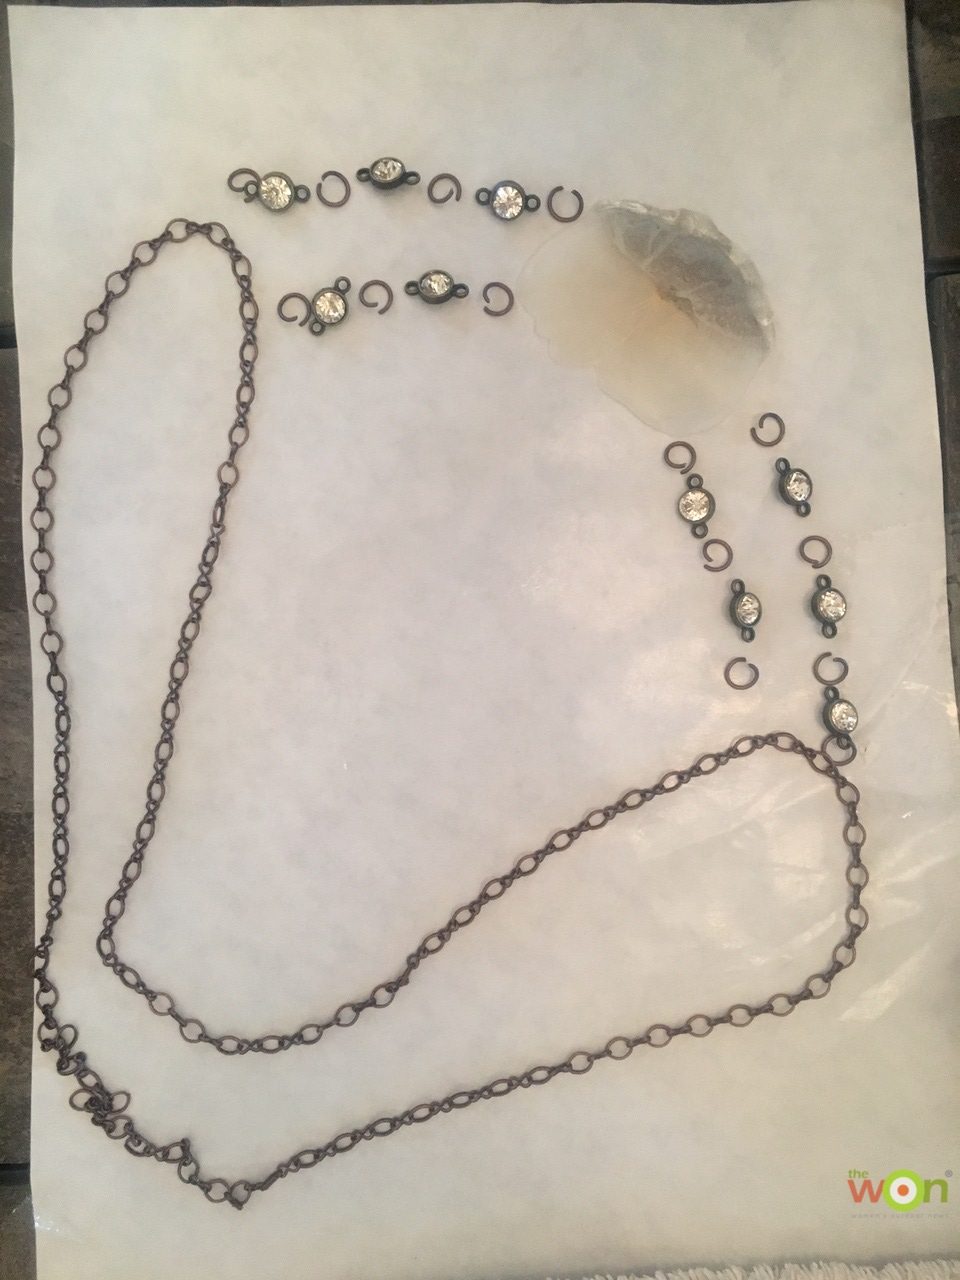 Tarpon scale necklace materials